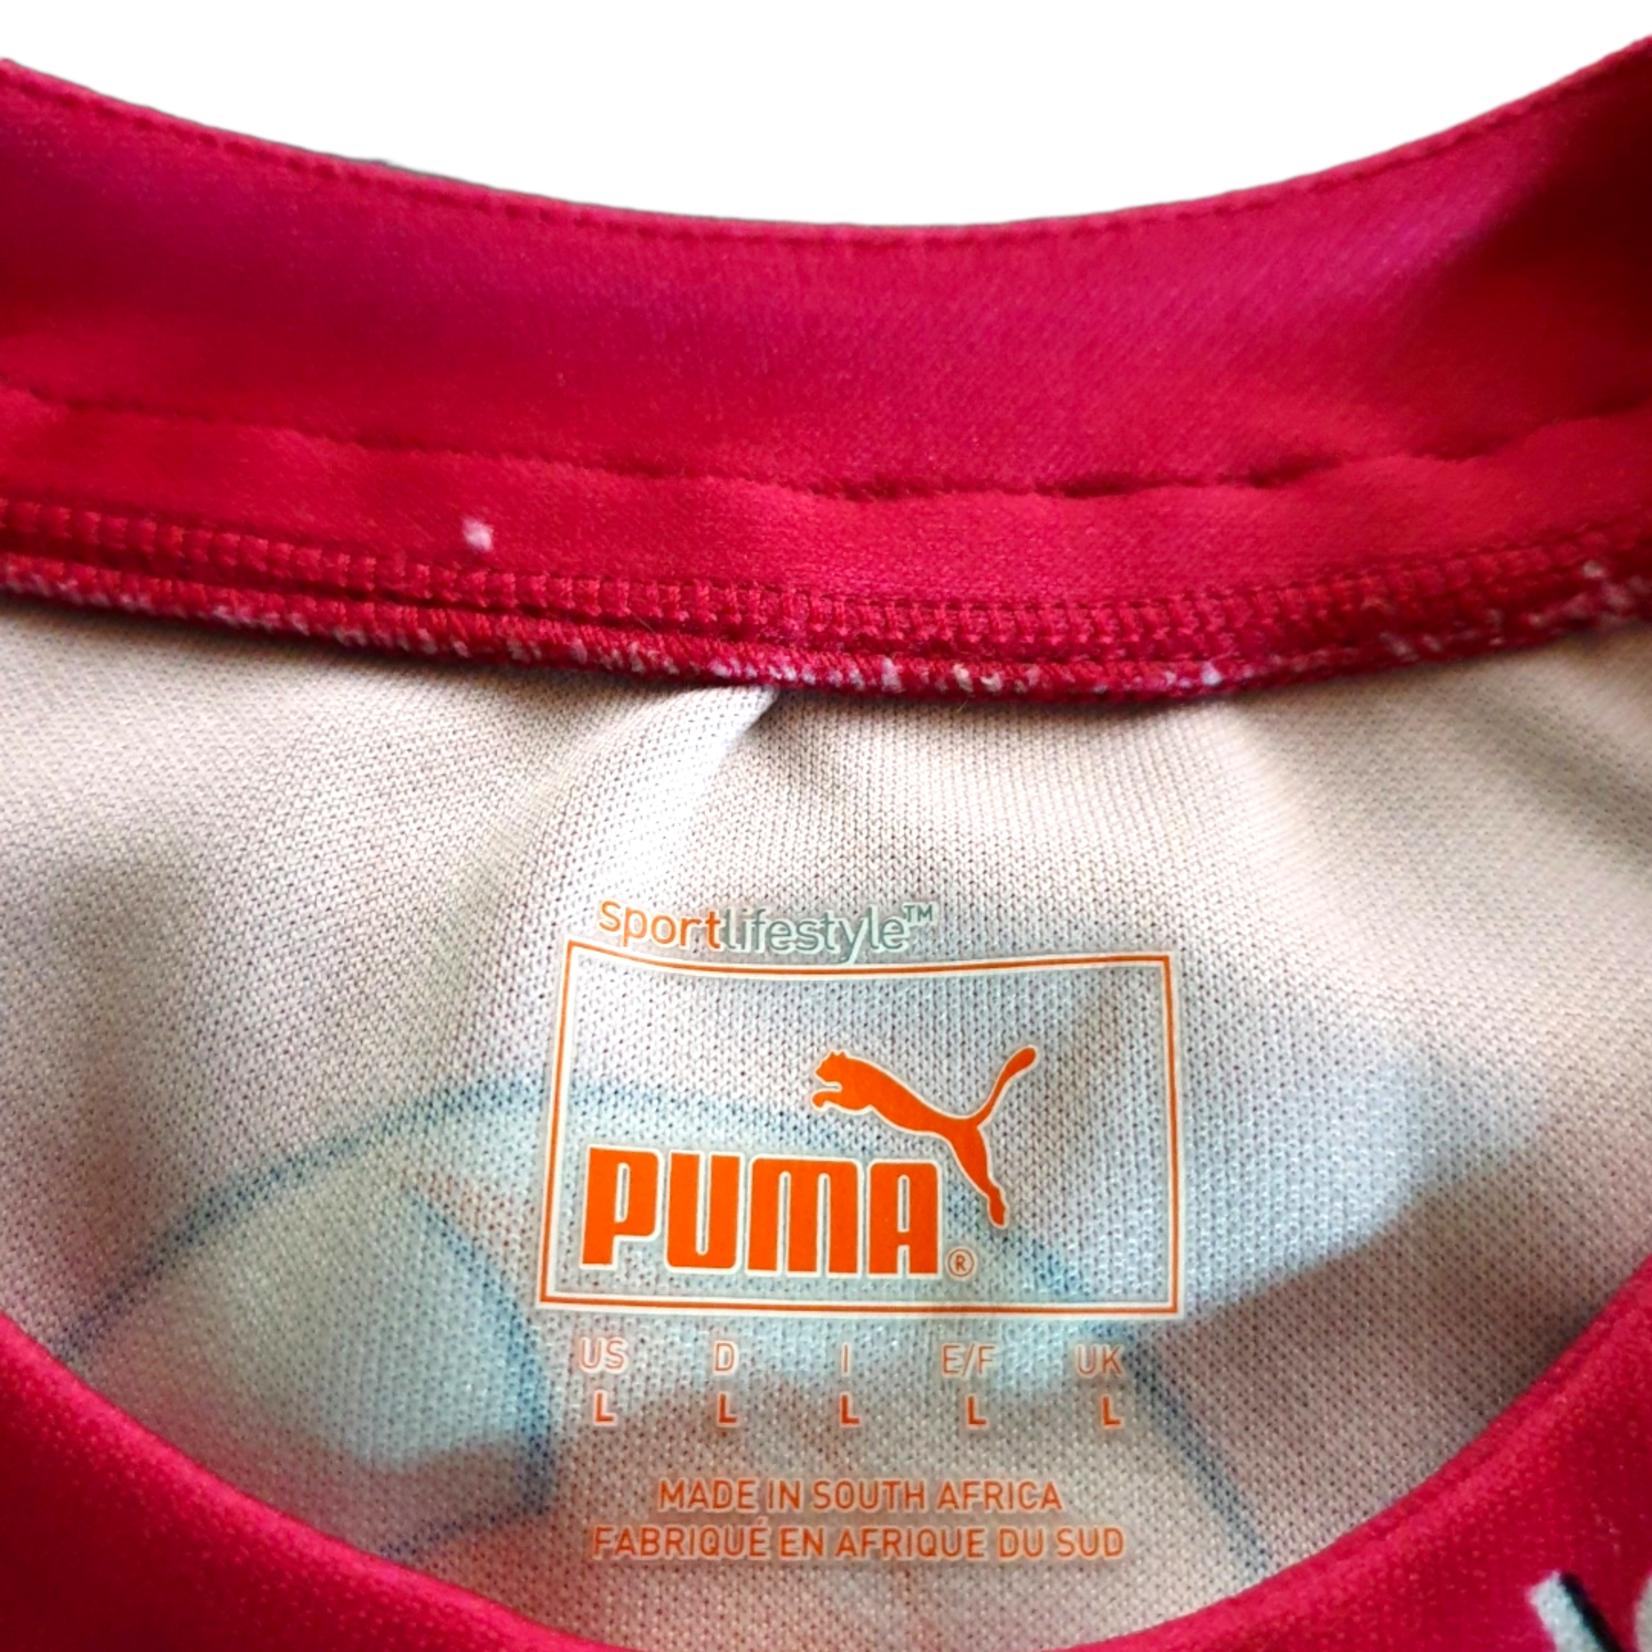 Puma vintage rugby jersey Vodacom Bulls 2012 - We Love Sports Shirts